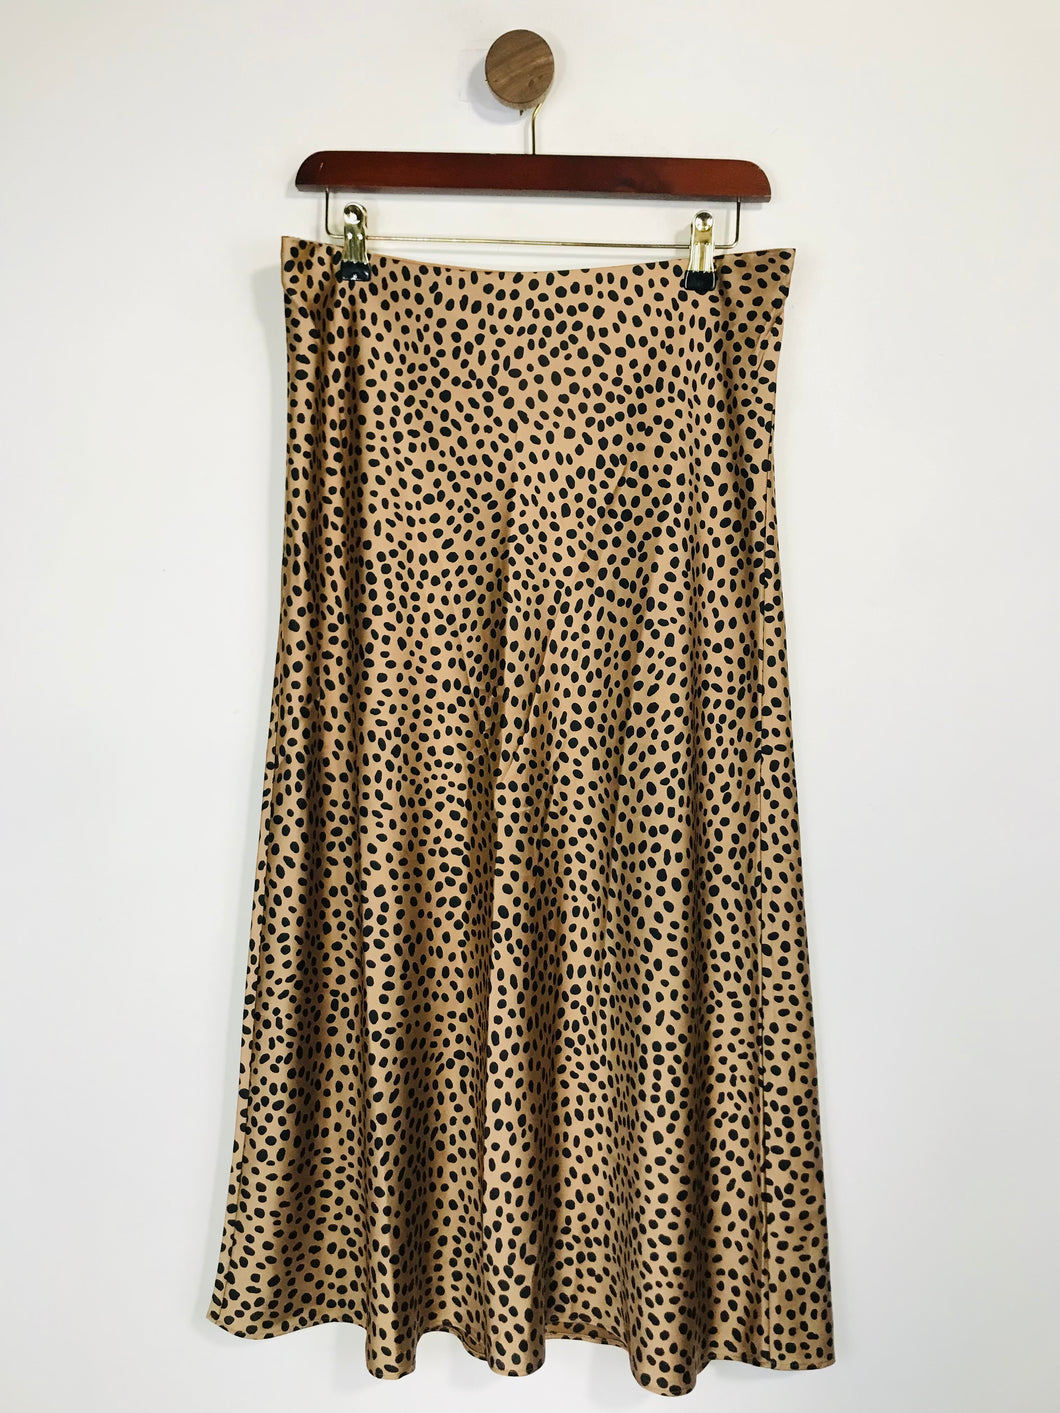 J. Crew Women's Leopard Print A-Line Skirt | M UK10-12 | Multicoloured